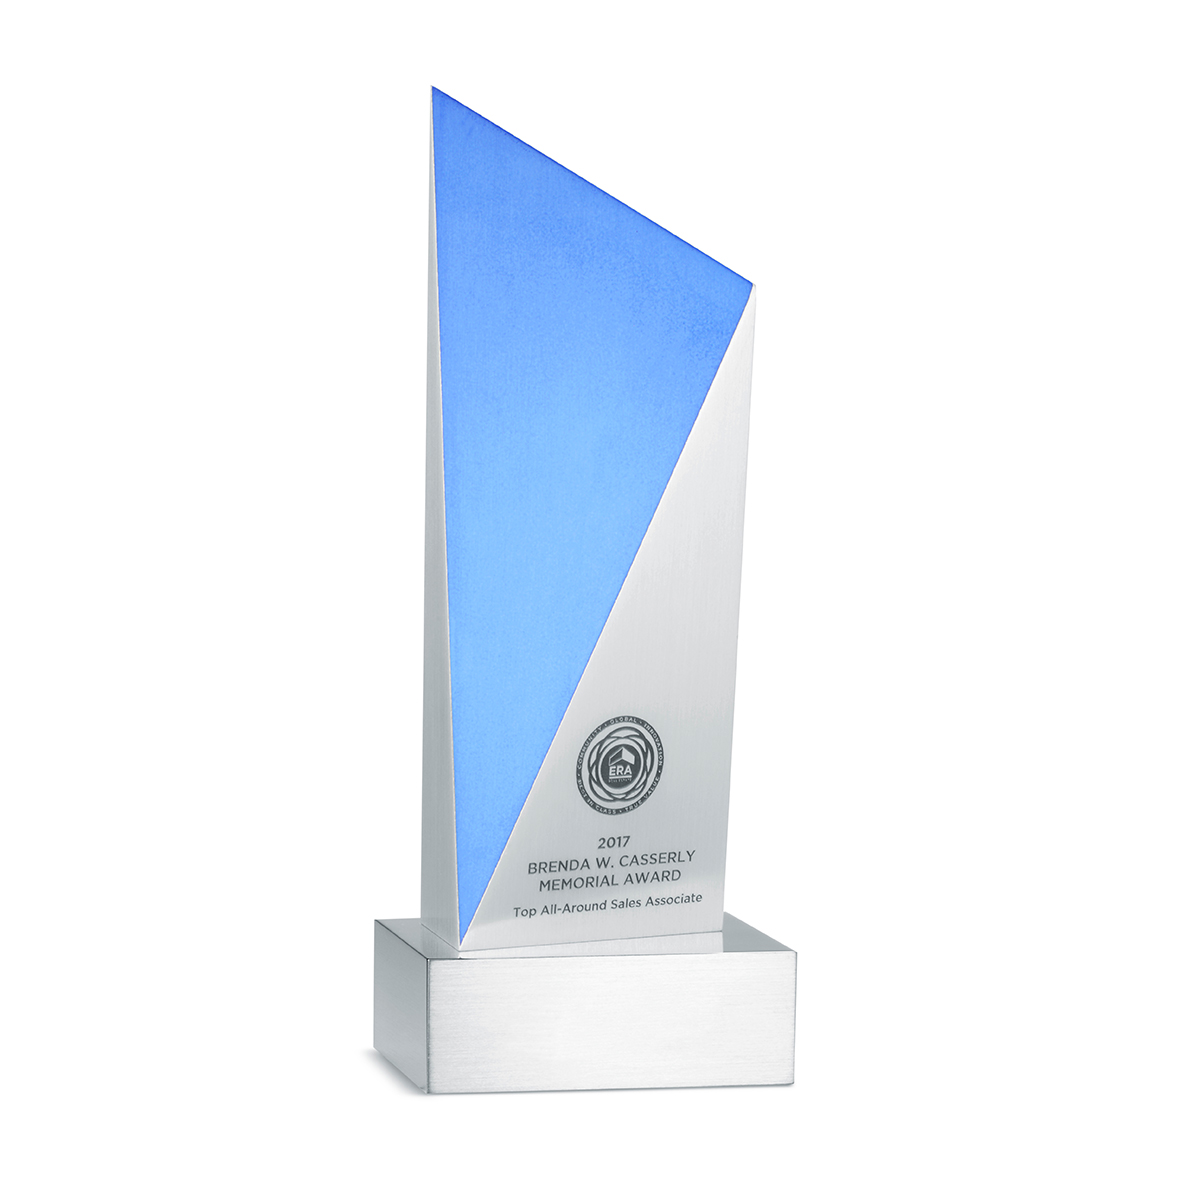 SRH Images_016_ERA Top Sales Associate Award.jpg